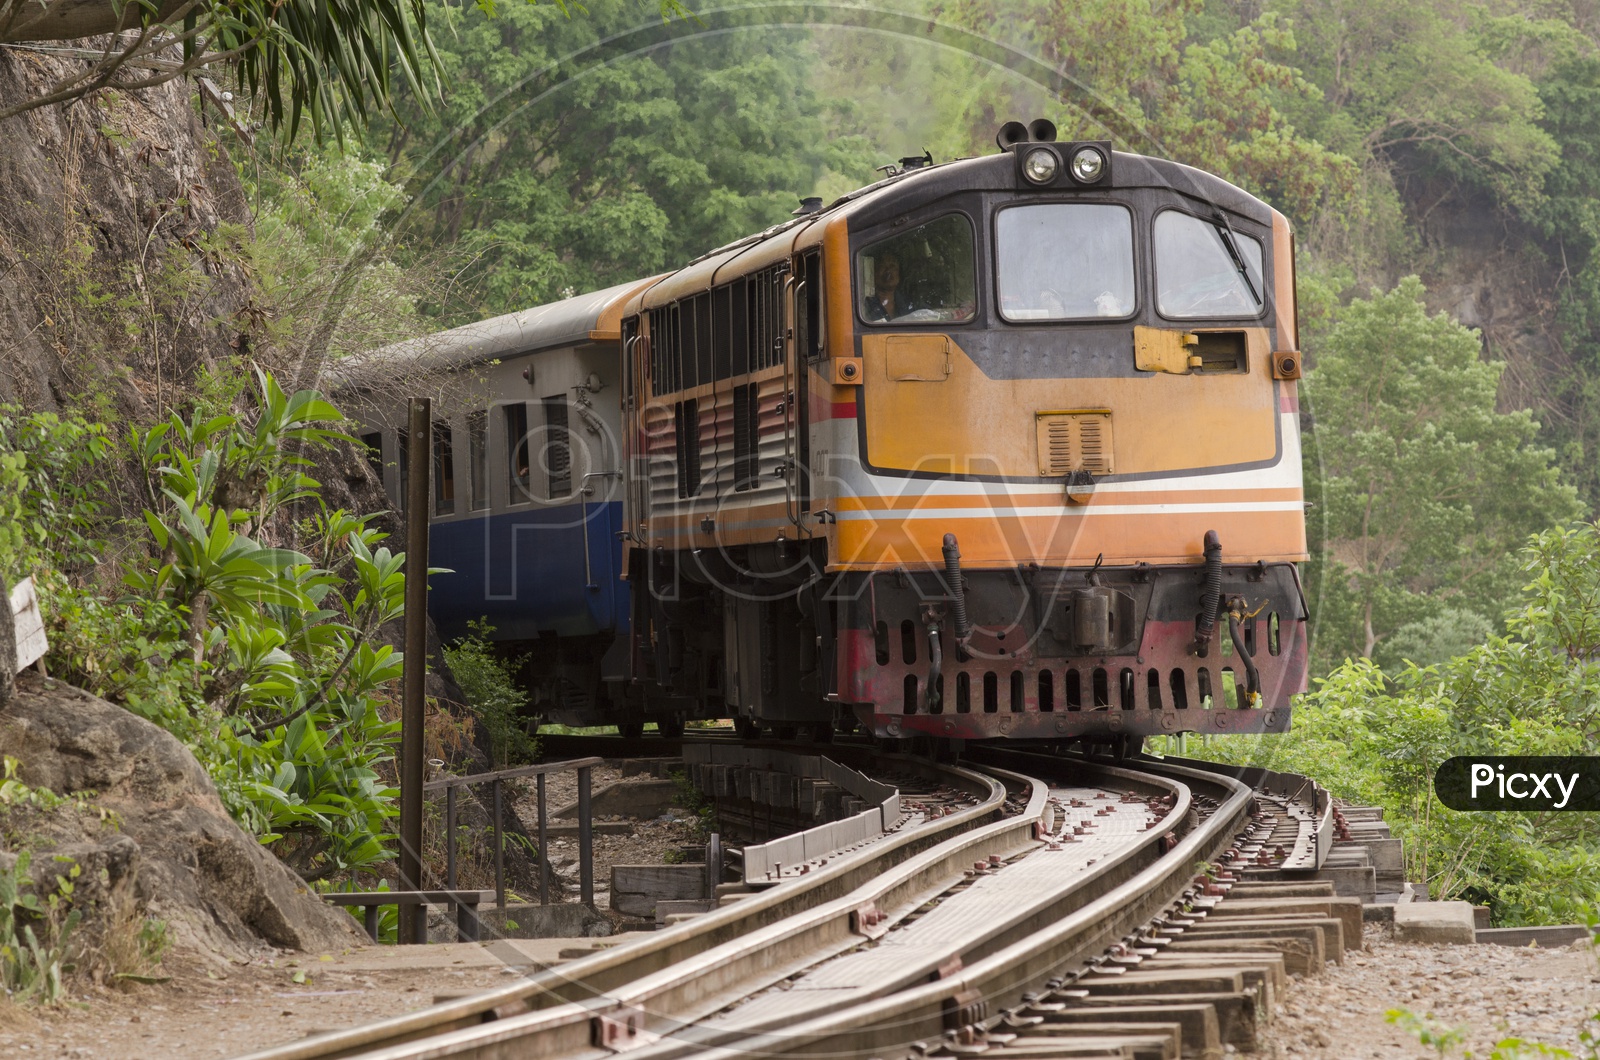 Moving train at death railway, Kanchanaburi, Thailand